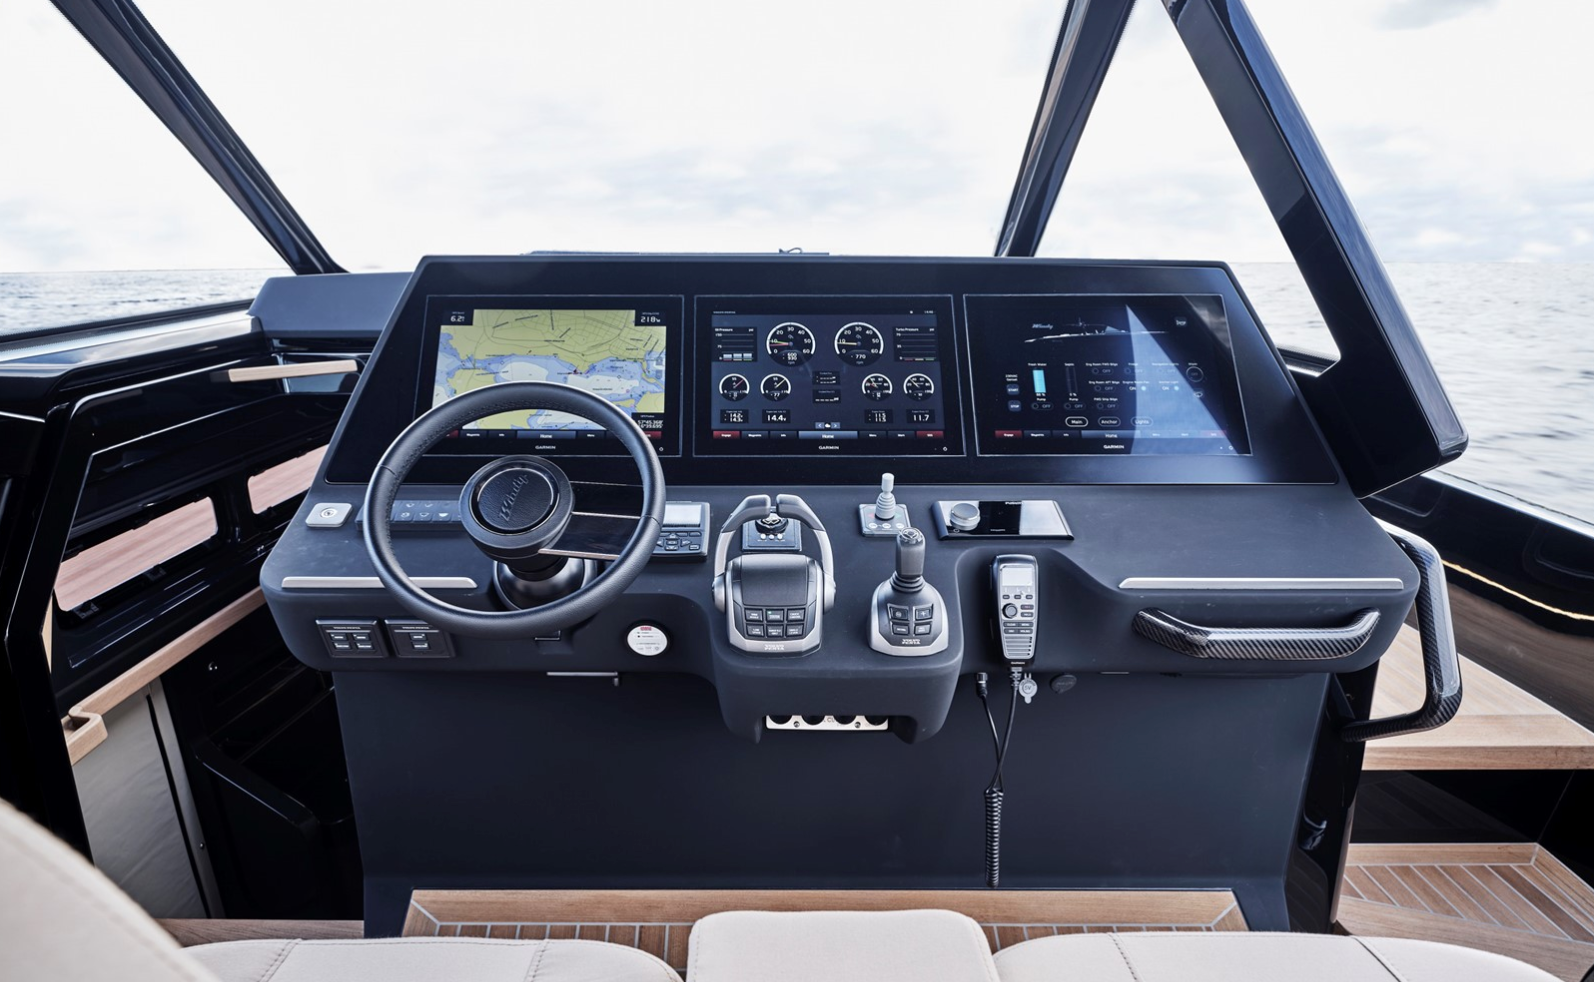 Windy SLR 60 helm, Volvo Penta Glass Dash, Volvo Penta joystick